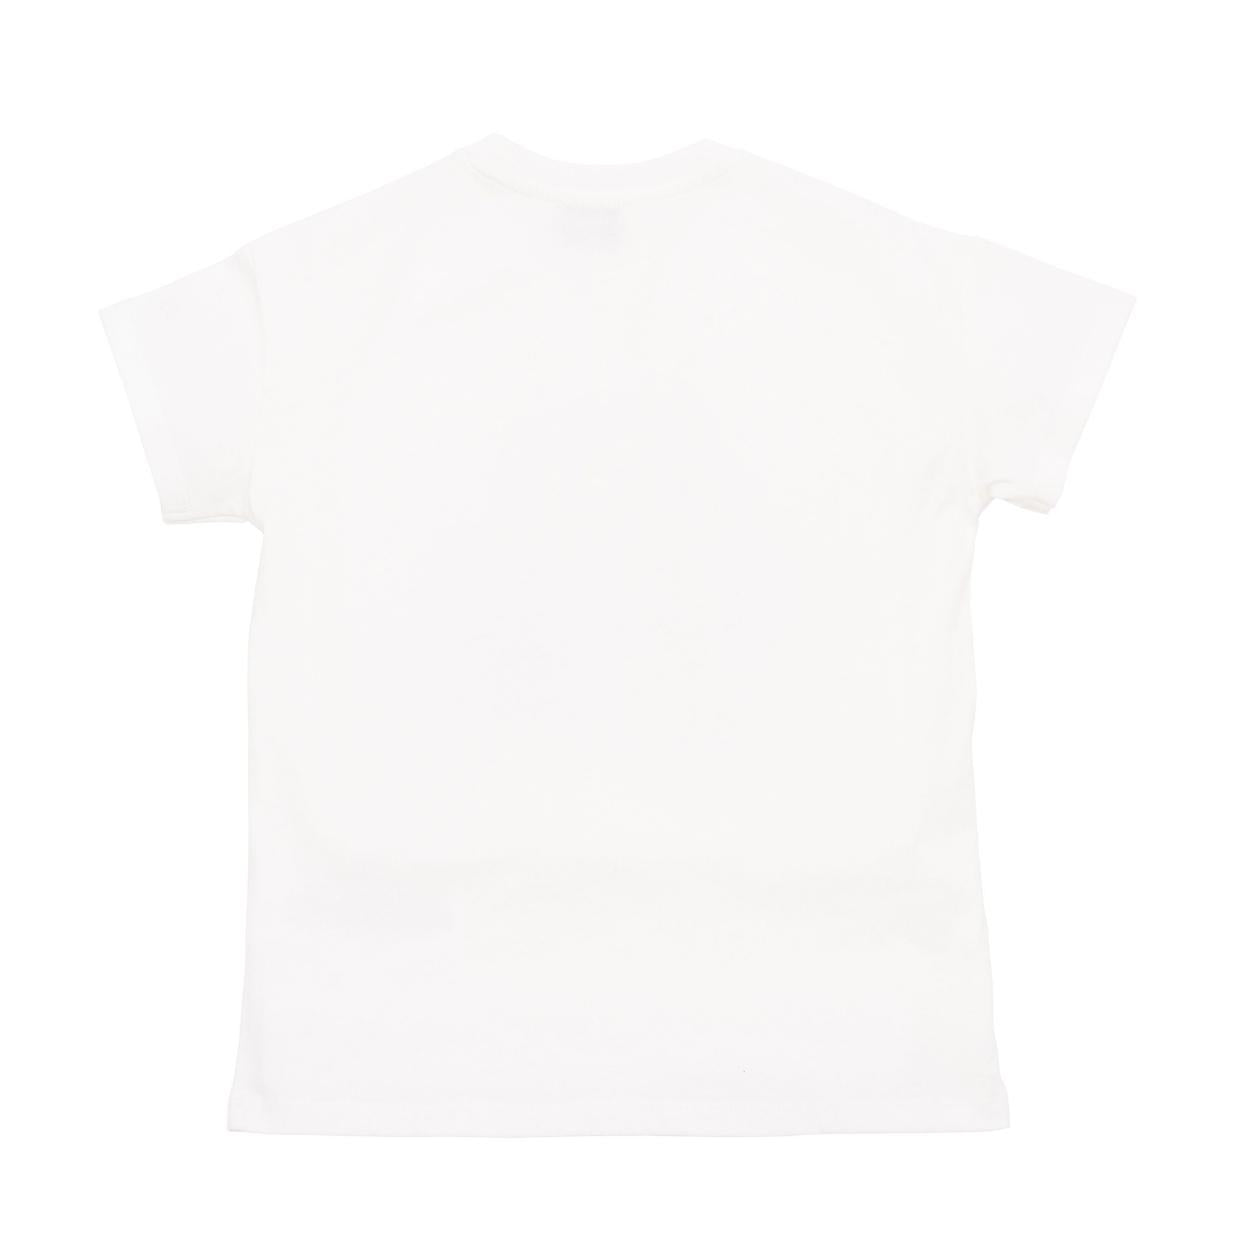 Kenzo Kids White Tropical Jungle Print T-Shirt